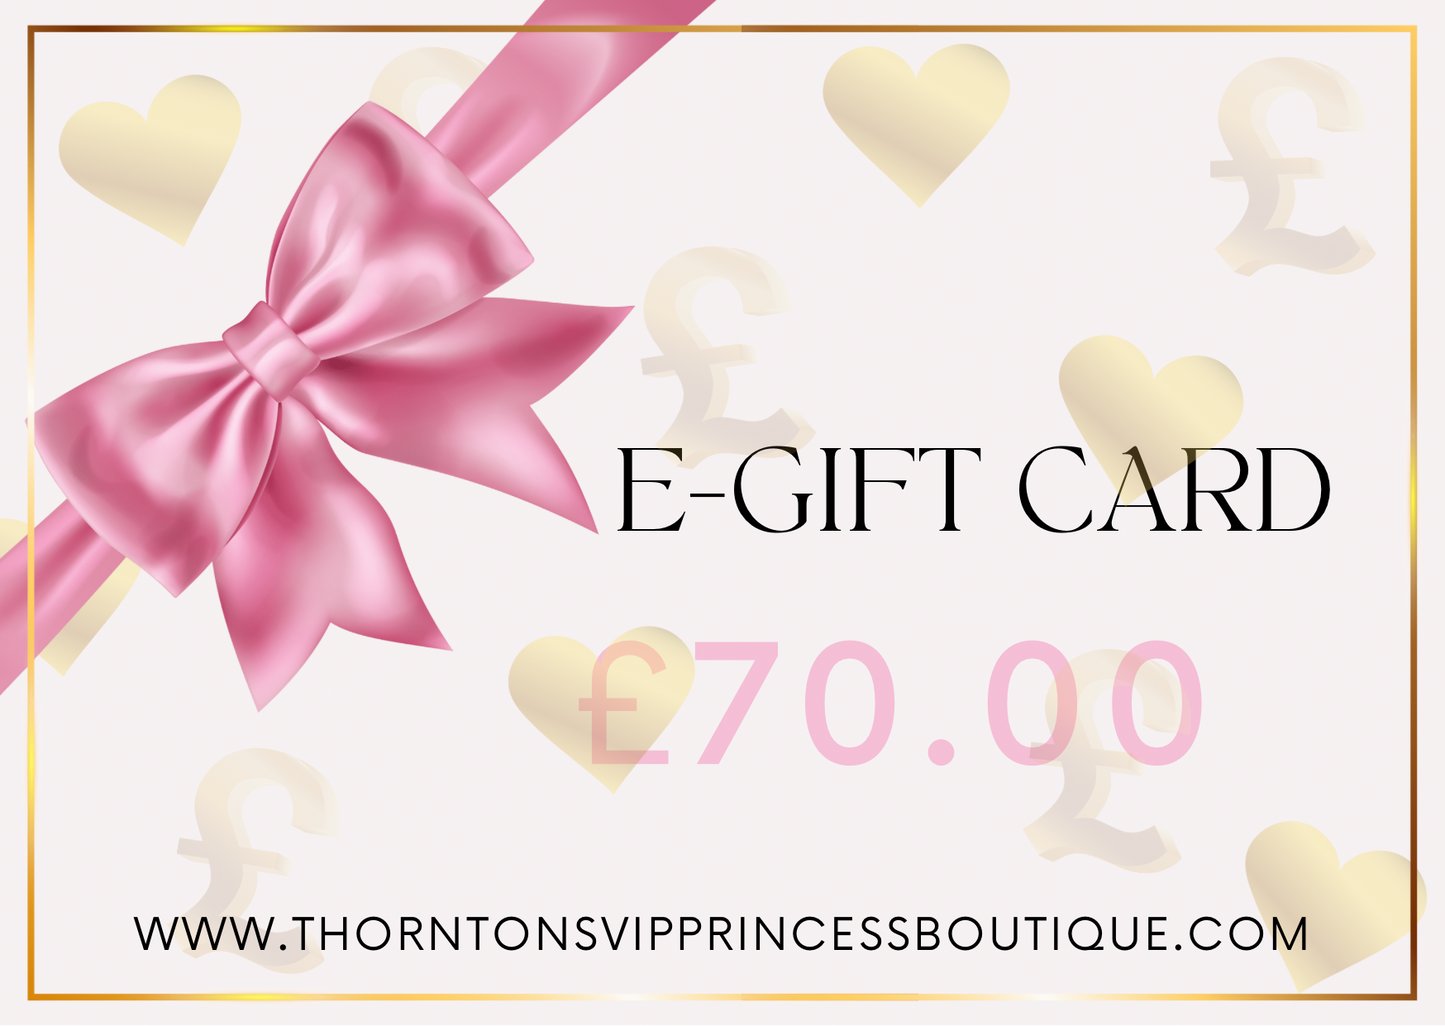 Thornton’s VIP Princess Boutique E-Gift Card